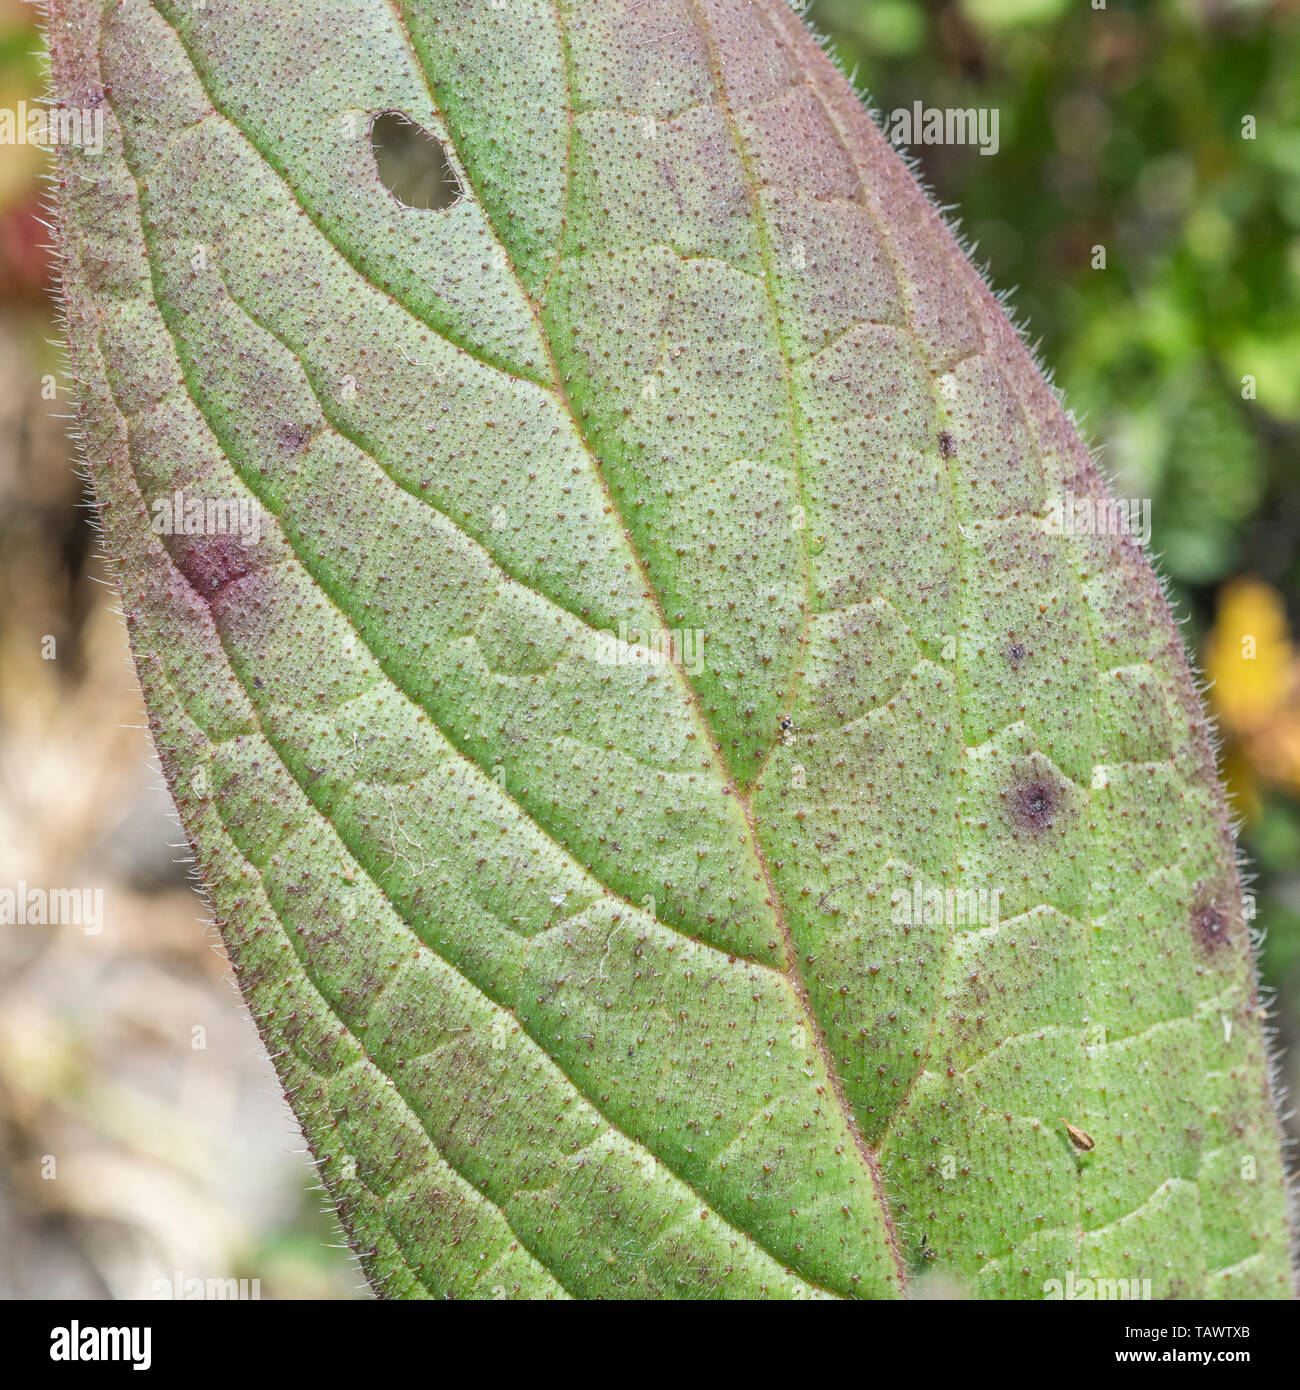 Macro close-up of Echium plant leaf. Uncertain whether it's E. pininana, candicans or fastuosum. Stock Photo